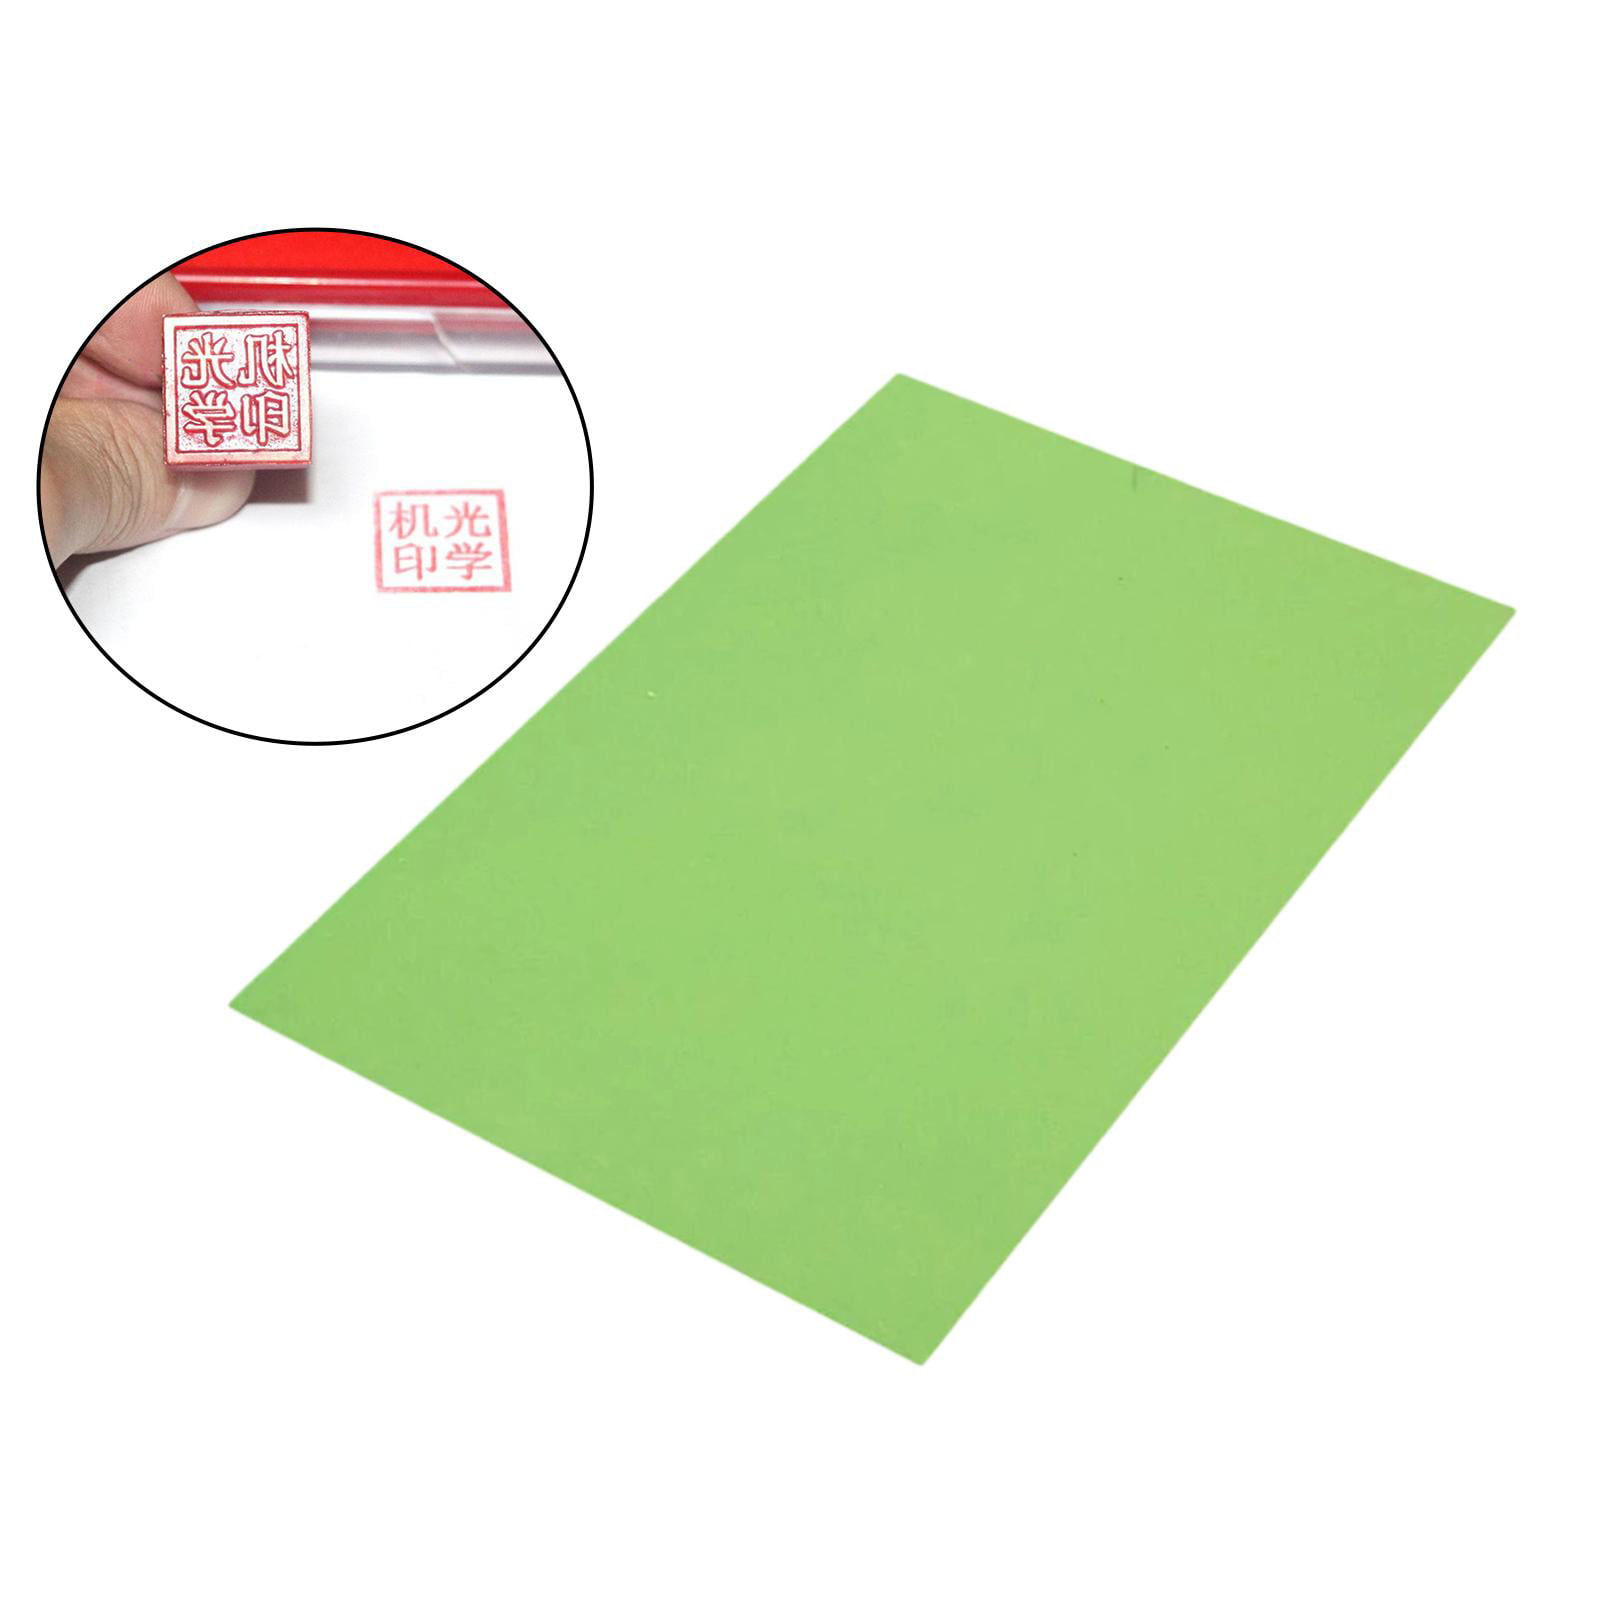 1 Sheet 20x30cm Photopolymer Plate Stamp Making DIY Craft Letterpress Polymer t 